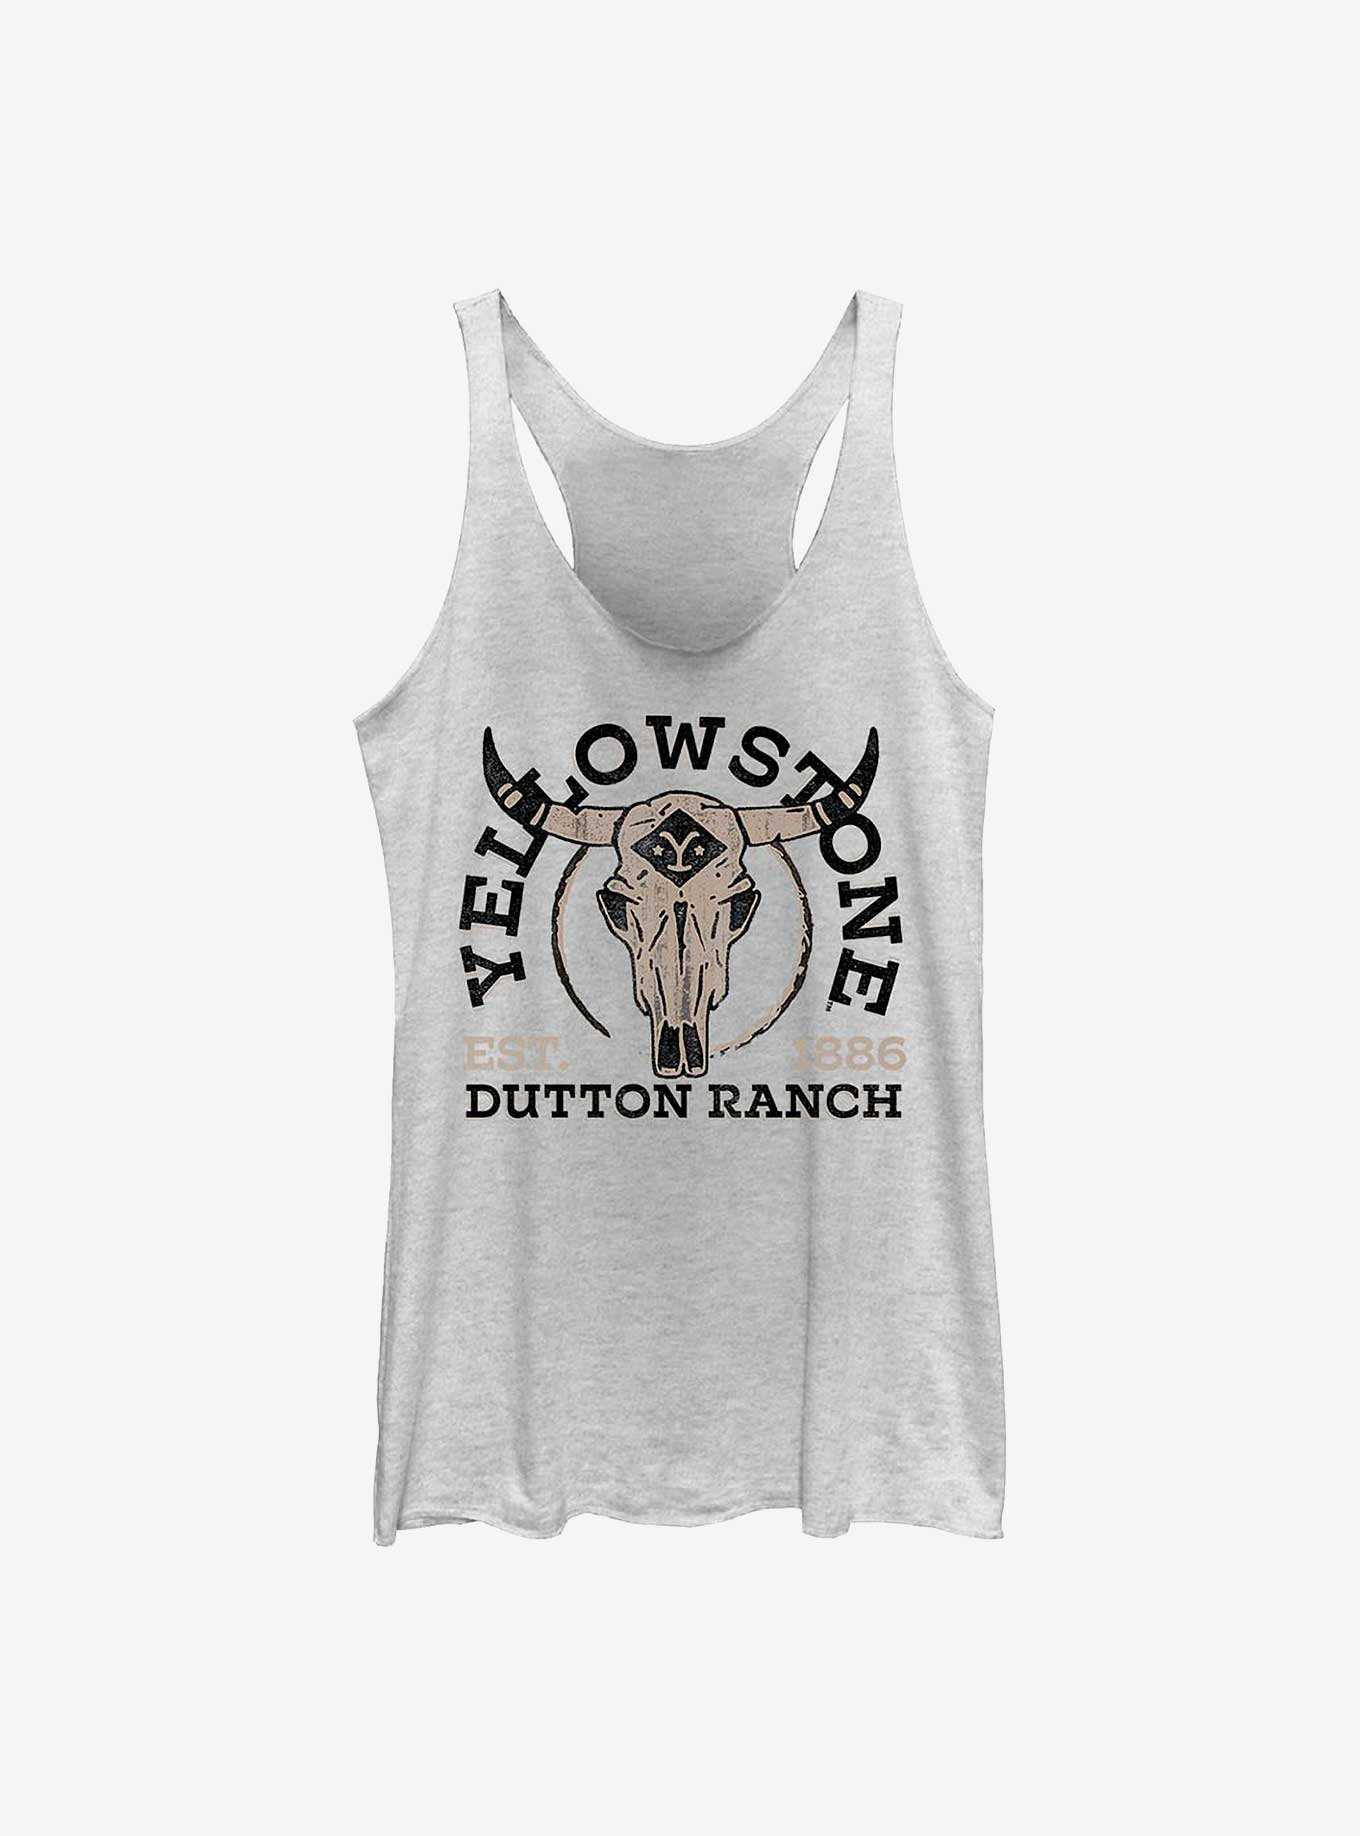 Yellowstone Dutton Ranch Girls Tank, , hi-res